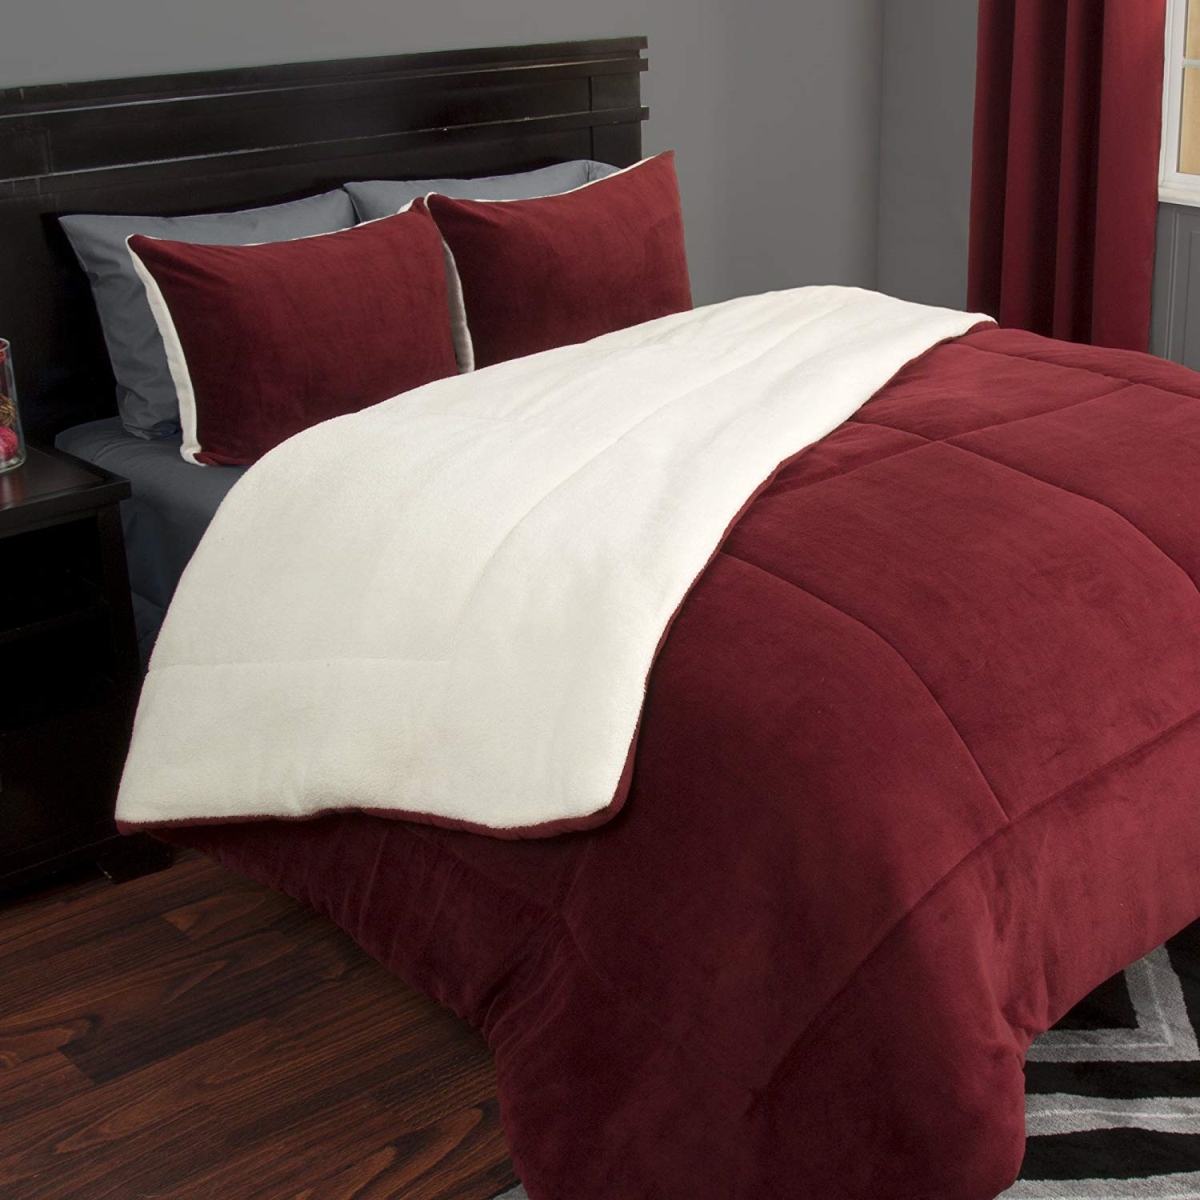 66a-27414 3 Piece Sherpa & Fleece Comforter Set, King Size - Burgundy